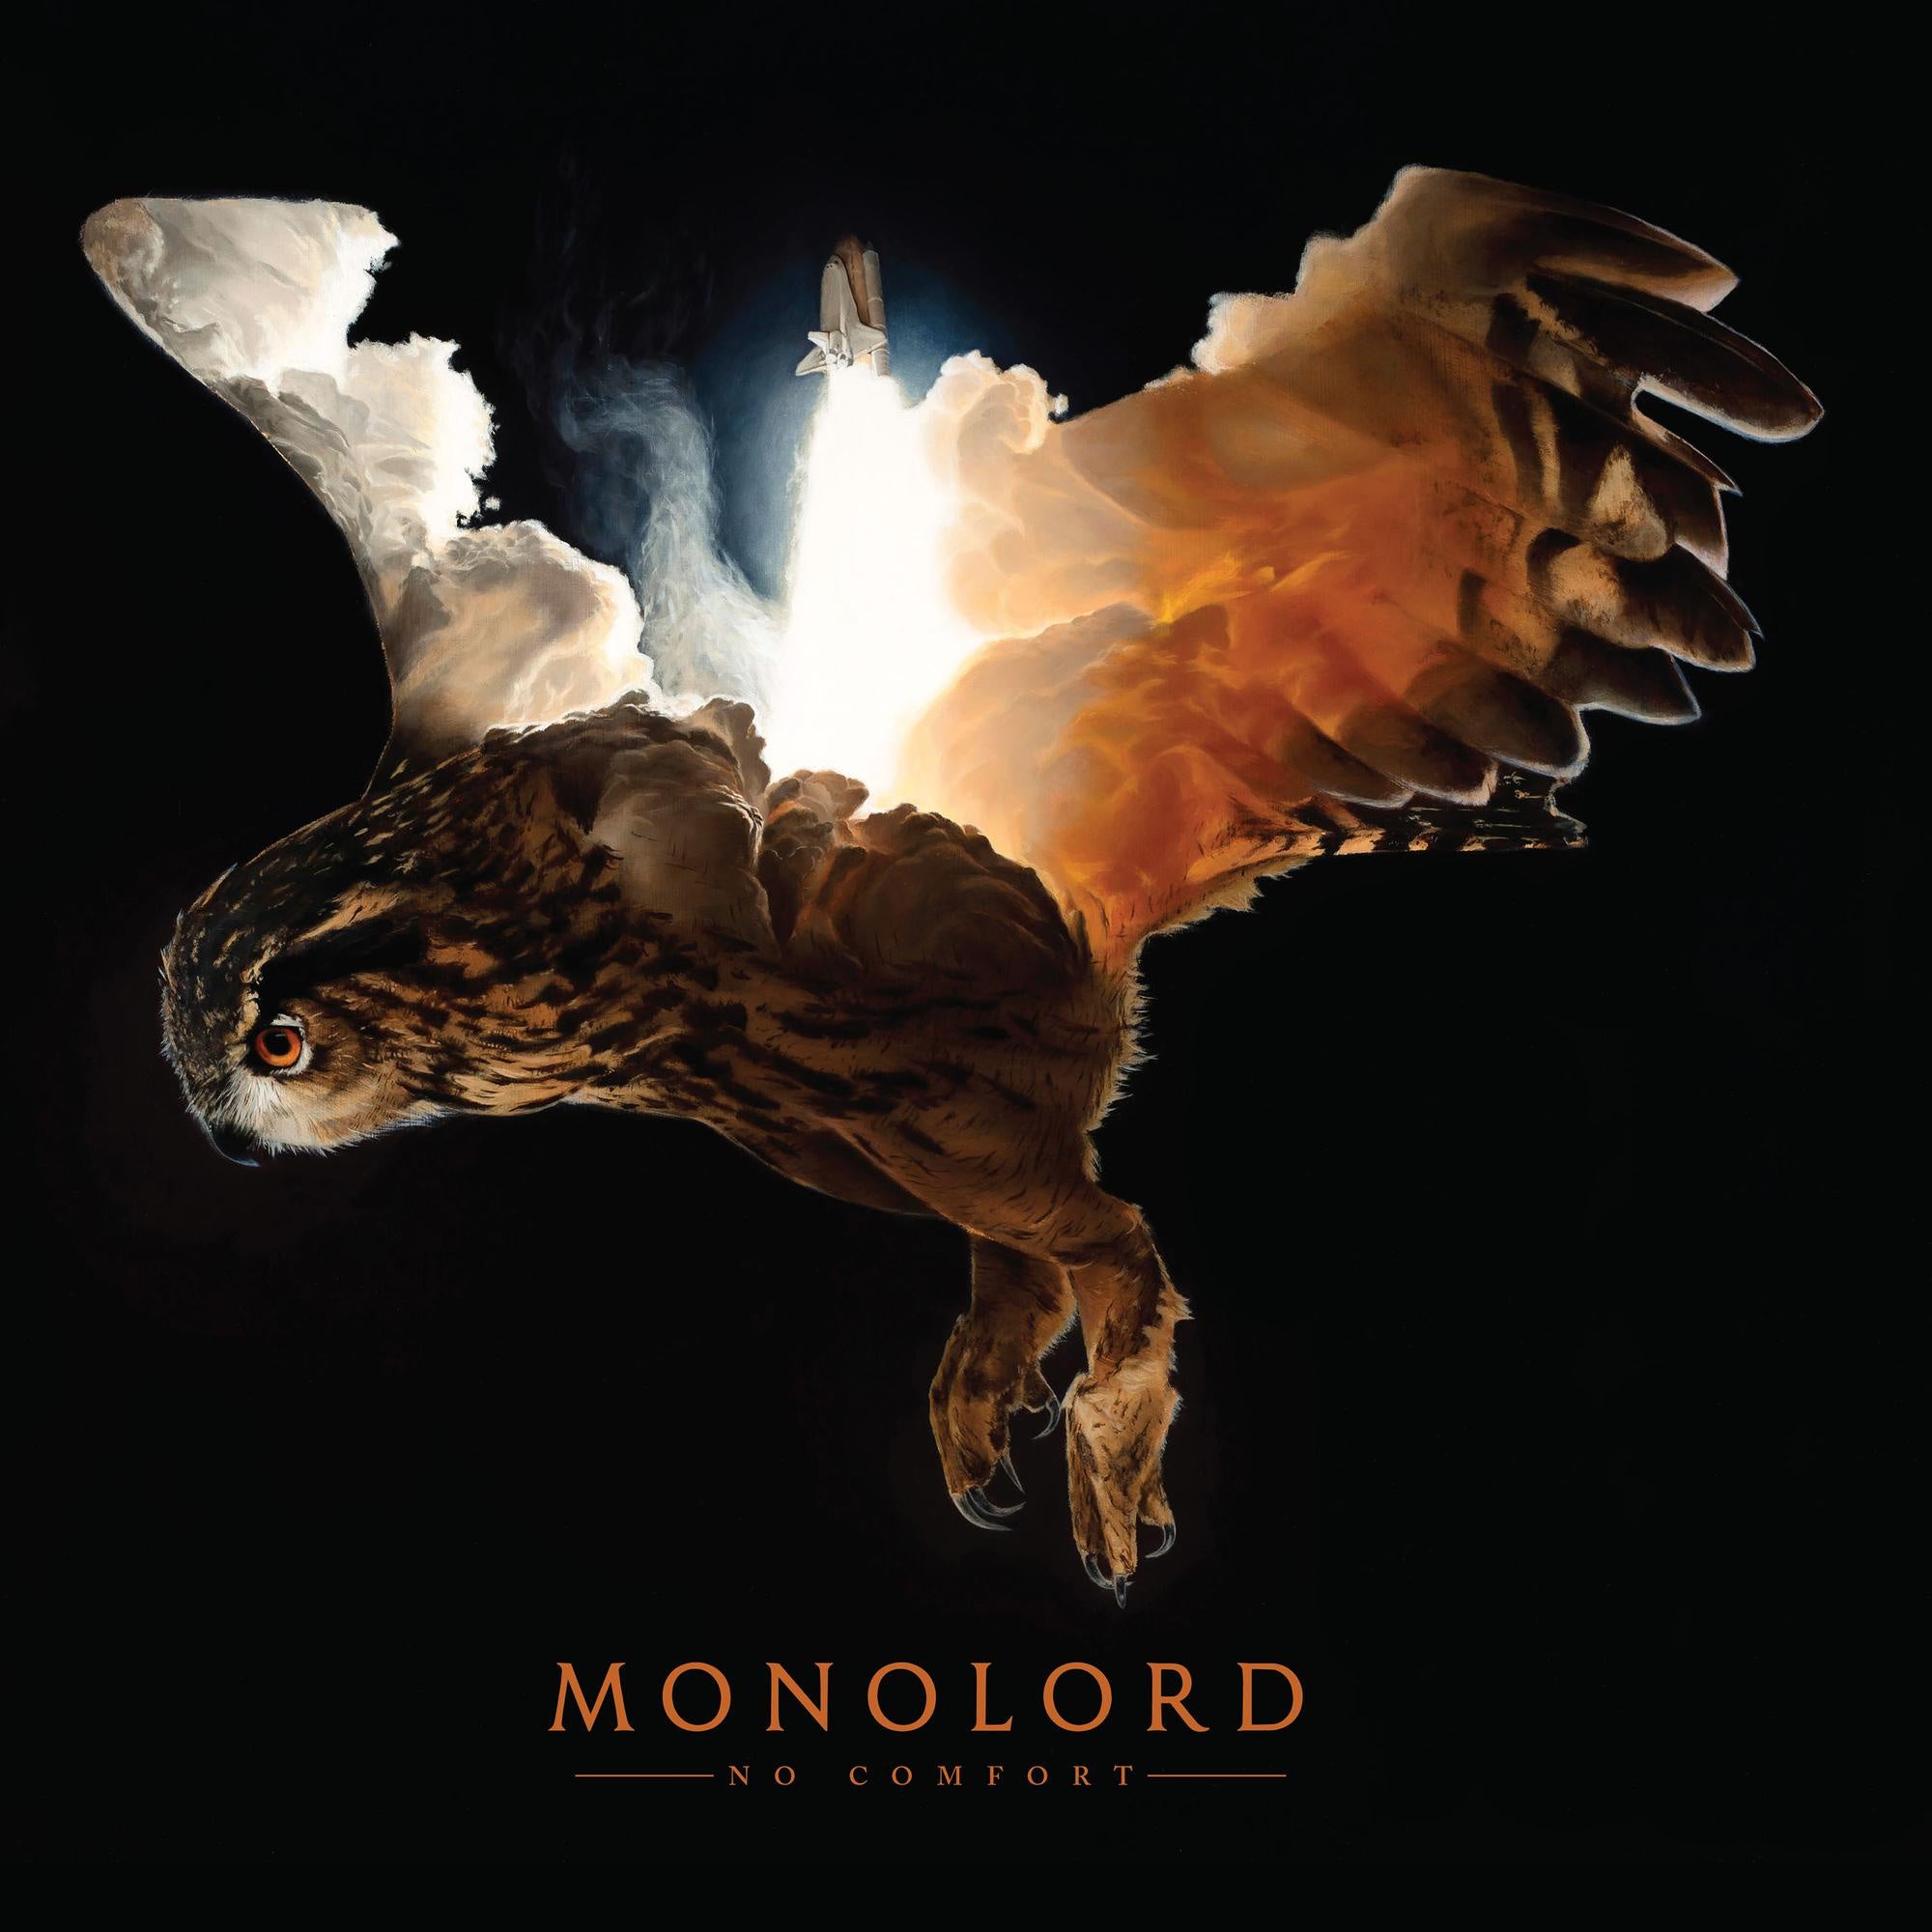 Monolord ‎– No Comfort - New 2 LP Record 2019 Relapse Vinyl - Doom Metal